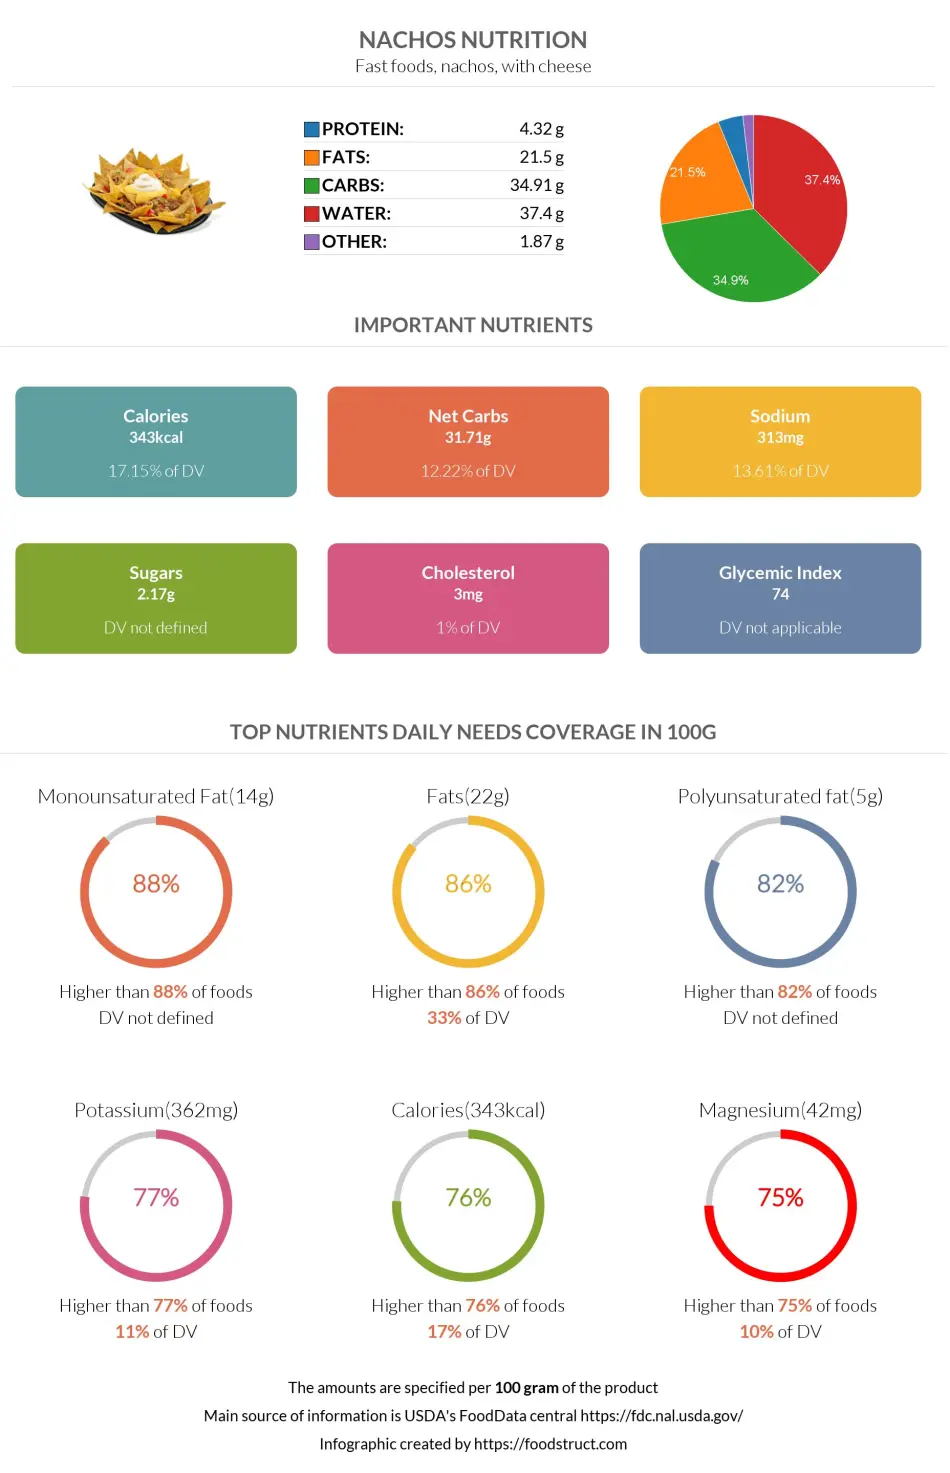 Nachos nutrition infographic